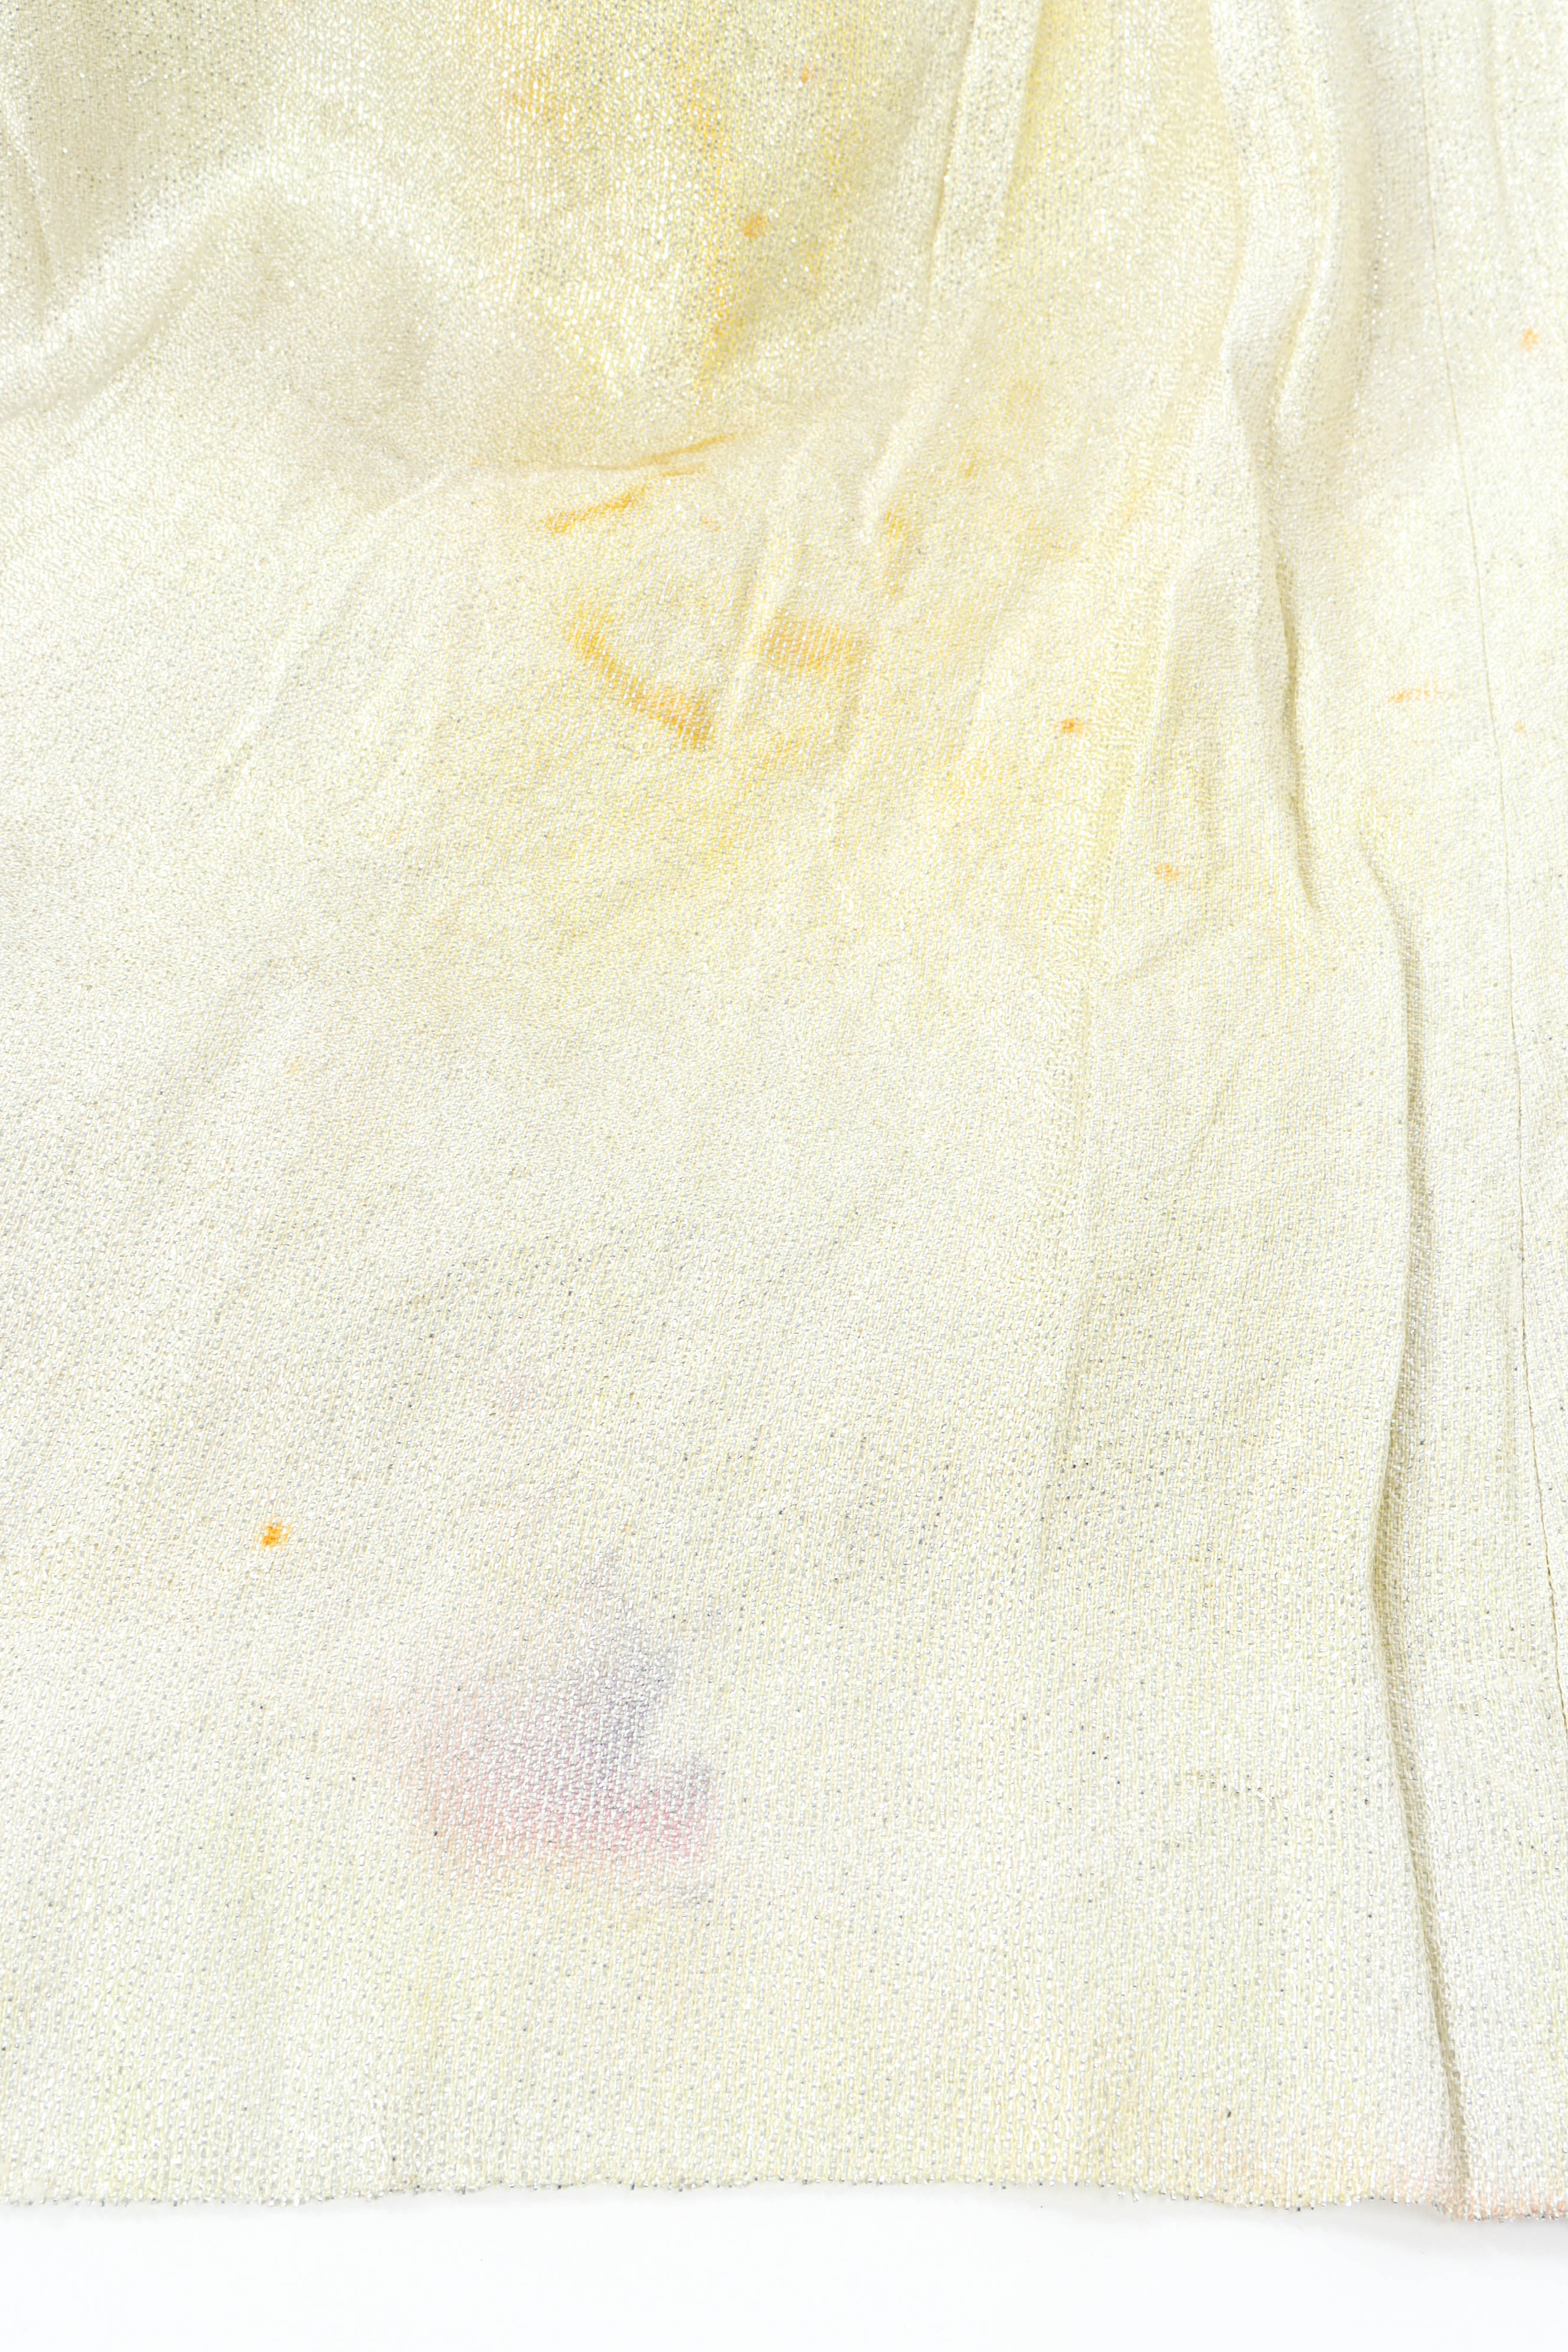 Vintage Bonwit Teller Rhinestone Dotted Dress beige liner hem stain @ Recess LA